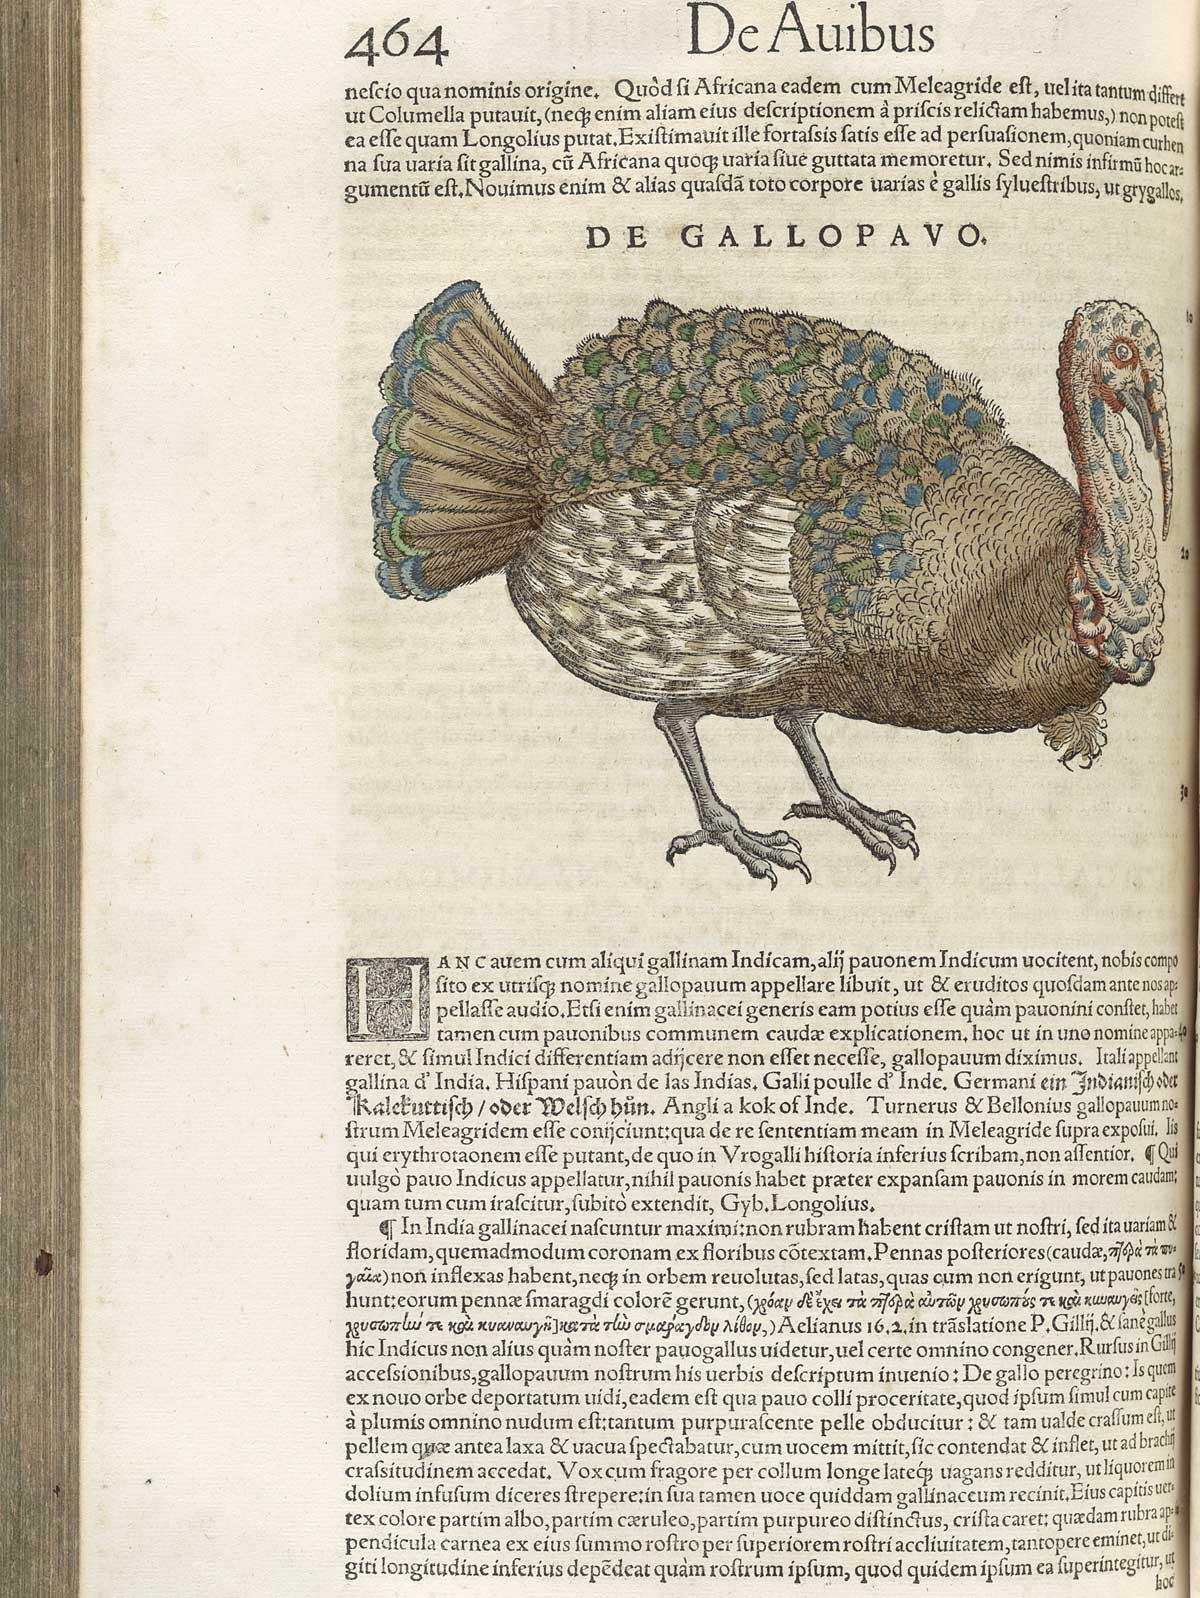 Page 464 from volume 3 of Conrad Gessner's Conradi Gesneri medici Tigurini Historiae animalium, featuring the colored woodcut of de gallopavo or a turkey.